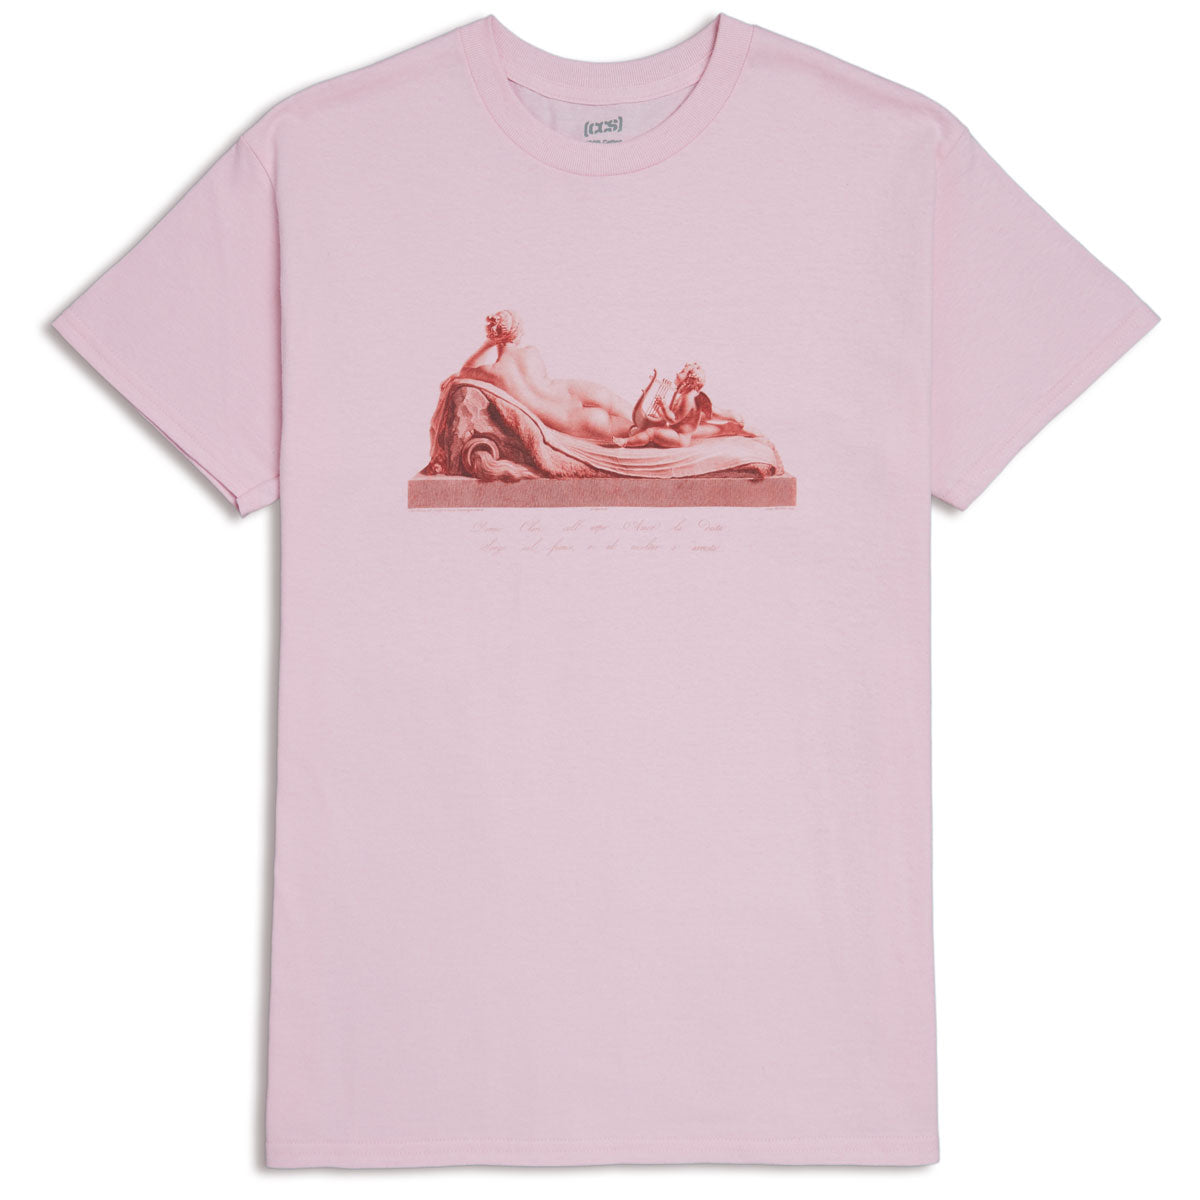 CCS Venus & Amor T-Shirt - Light Pink image 1